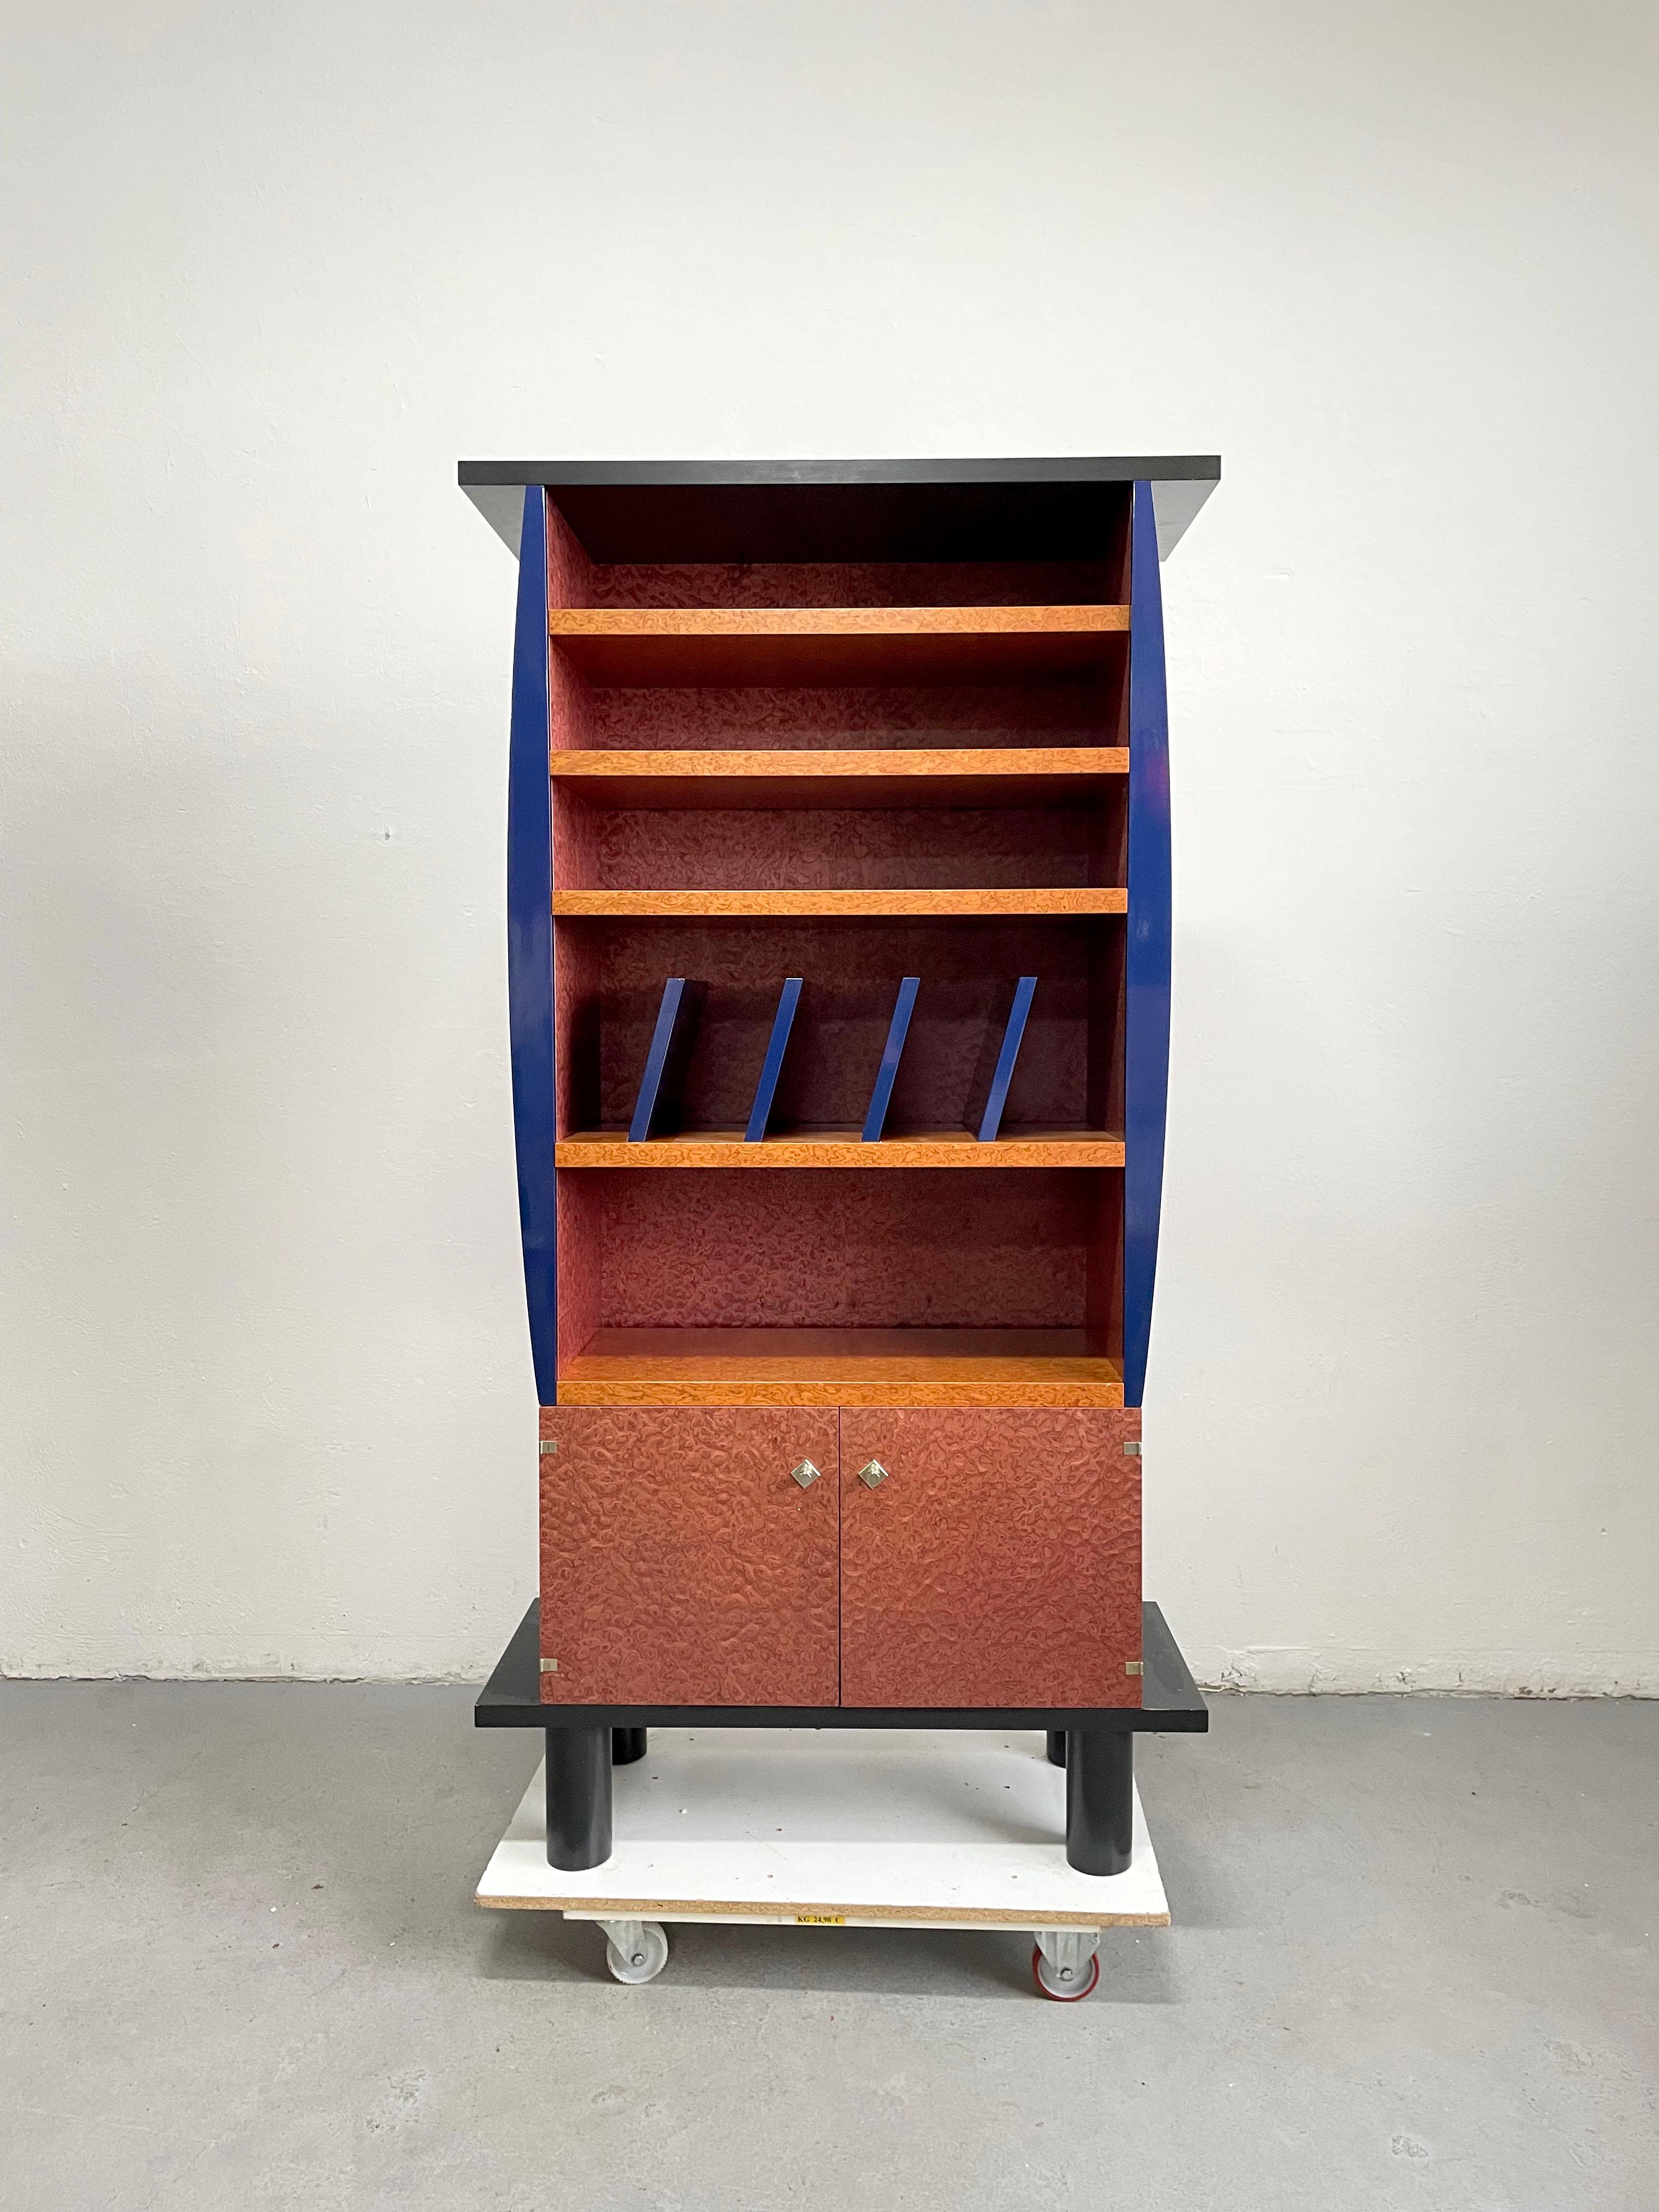 A rare Memphis design bookcase cabinet from the 